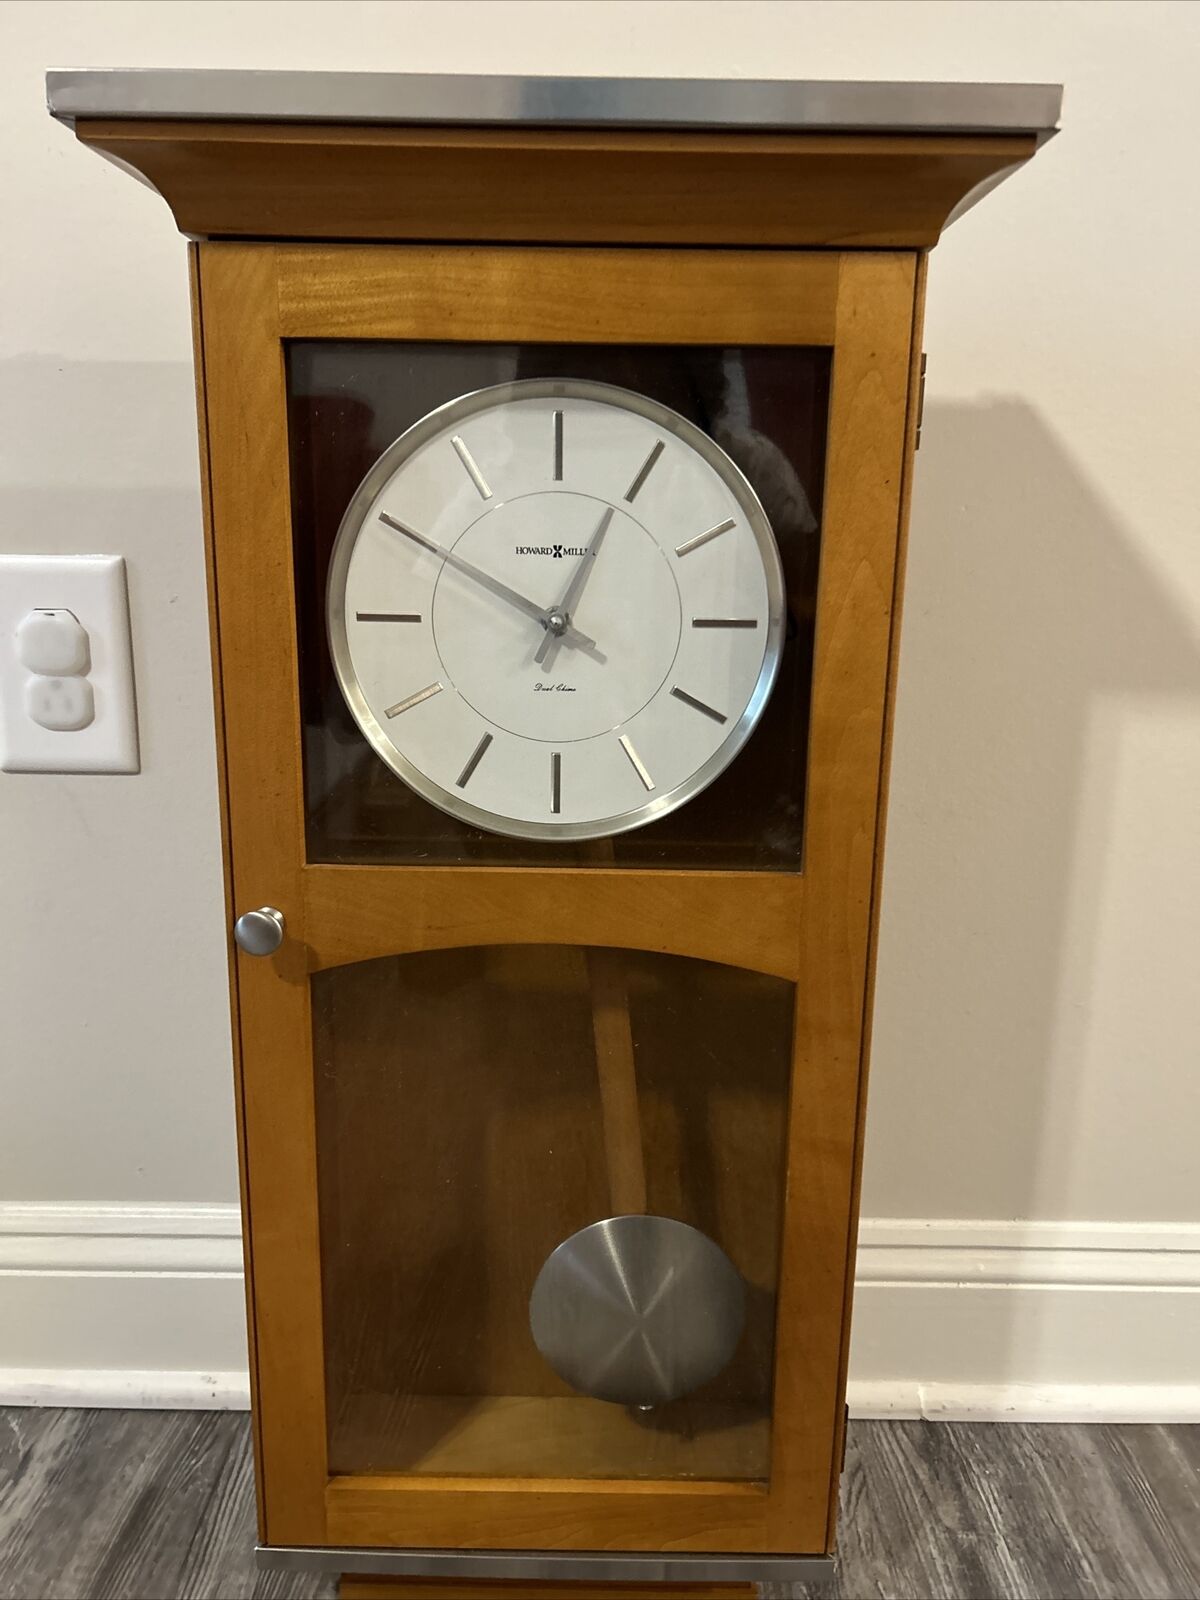 Rare Howard Miller Grandfather Wall Clock Model 620-224